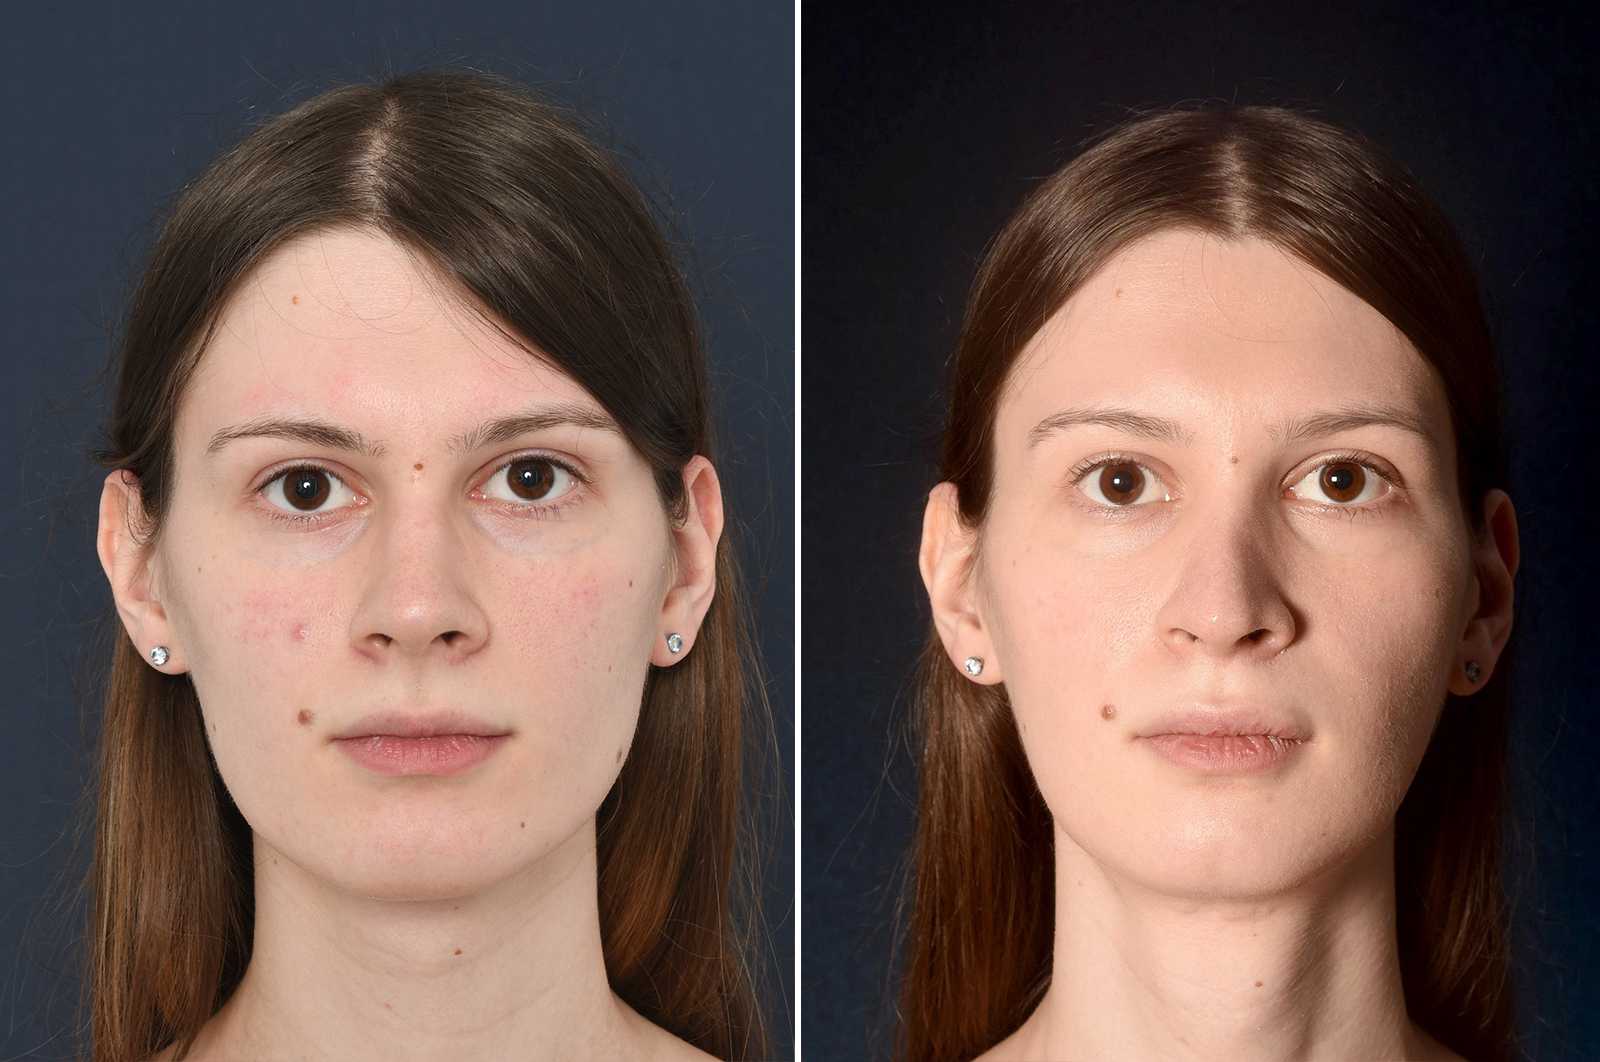 facial feminization software free